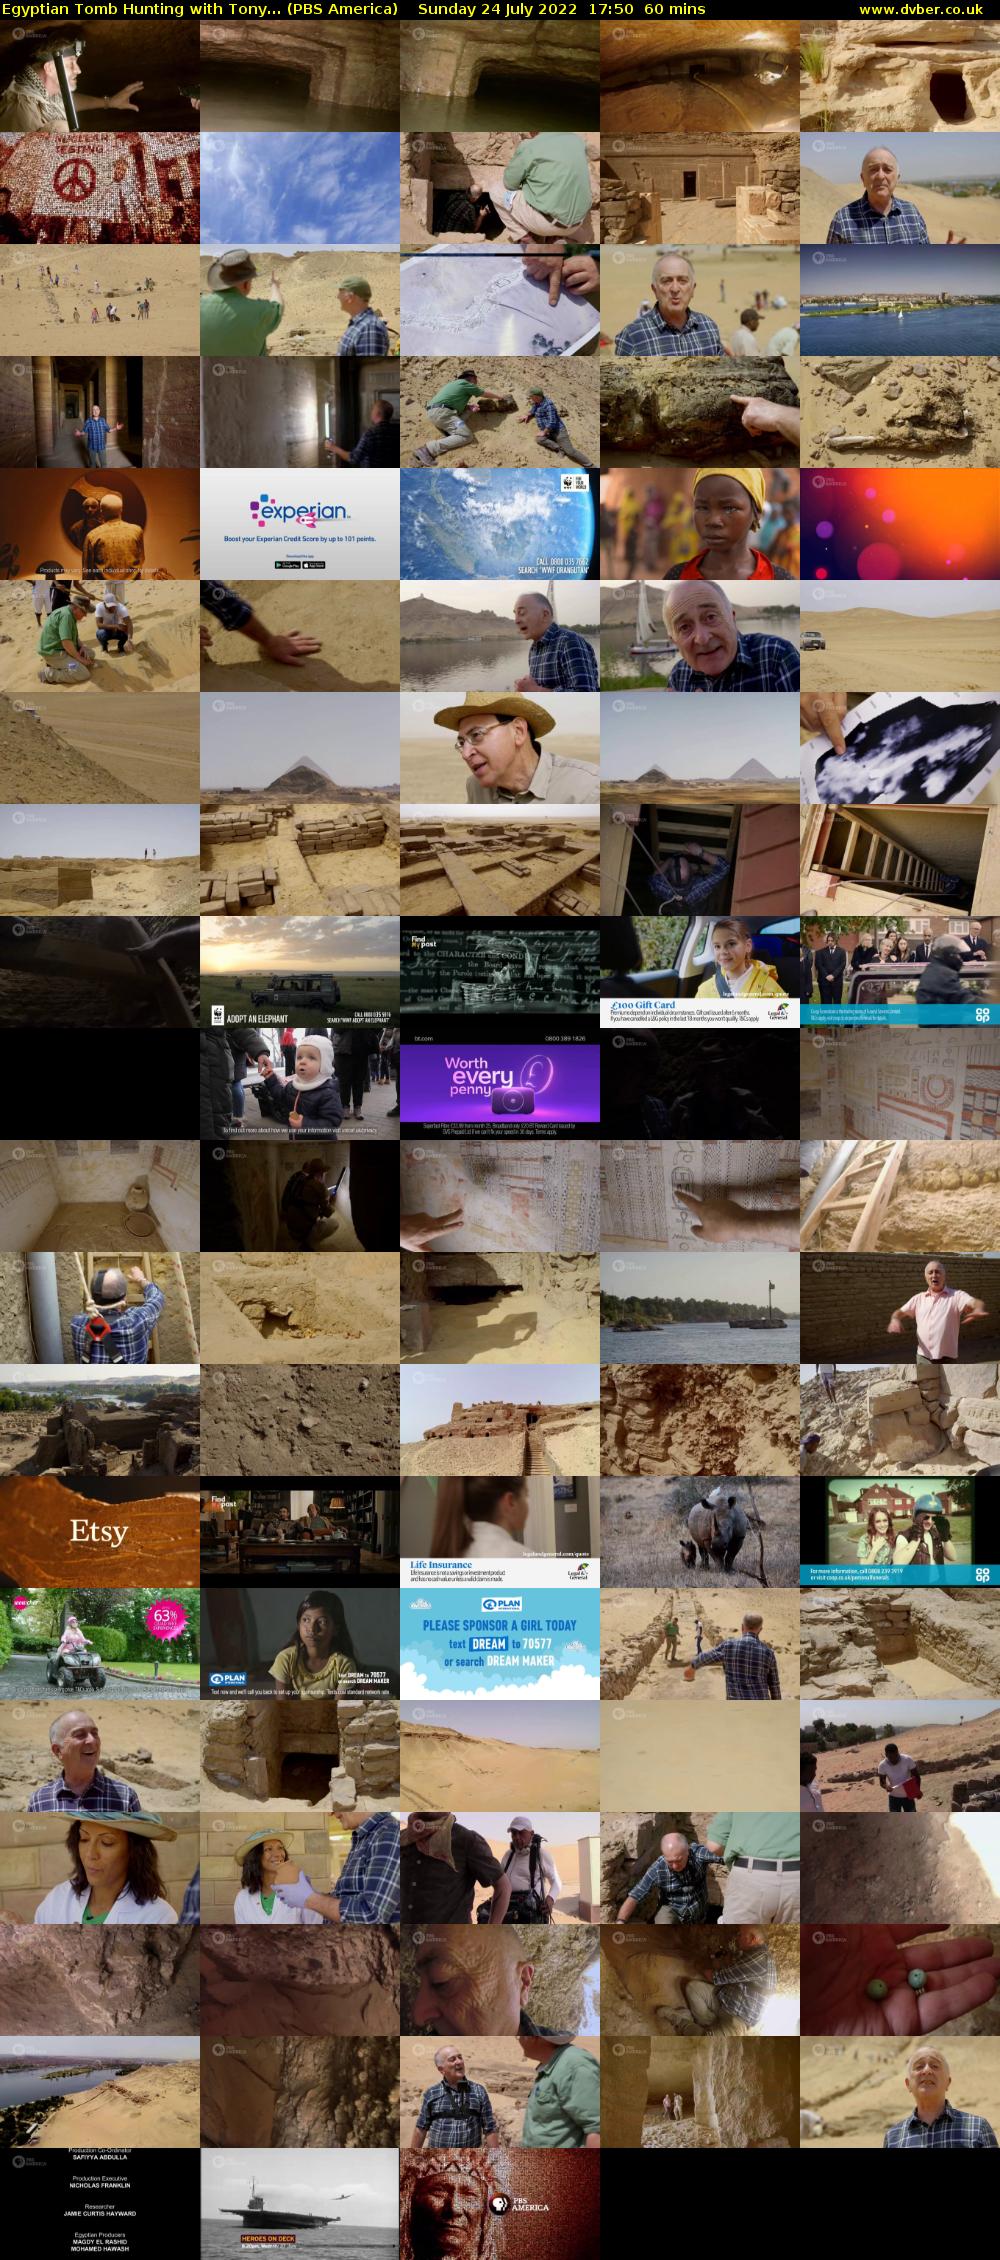 Egyptian Tomb Hunting With Tony... (PBS America) Sunday 24 July 2022 17:50 - 18:50